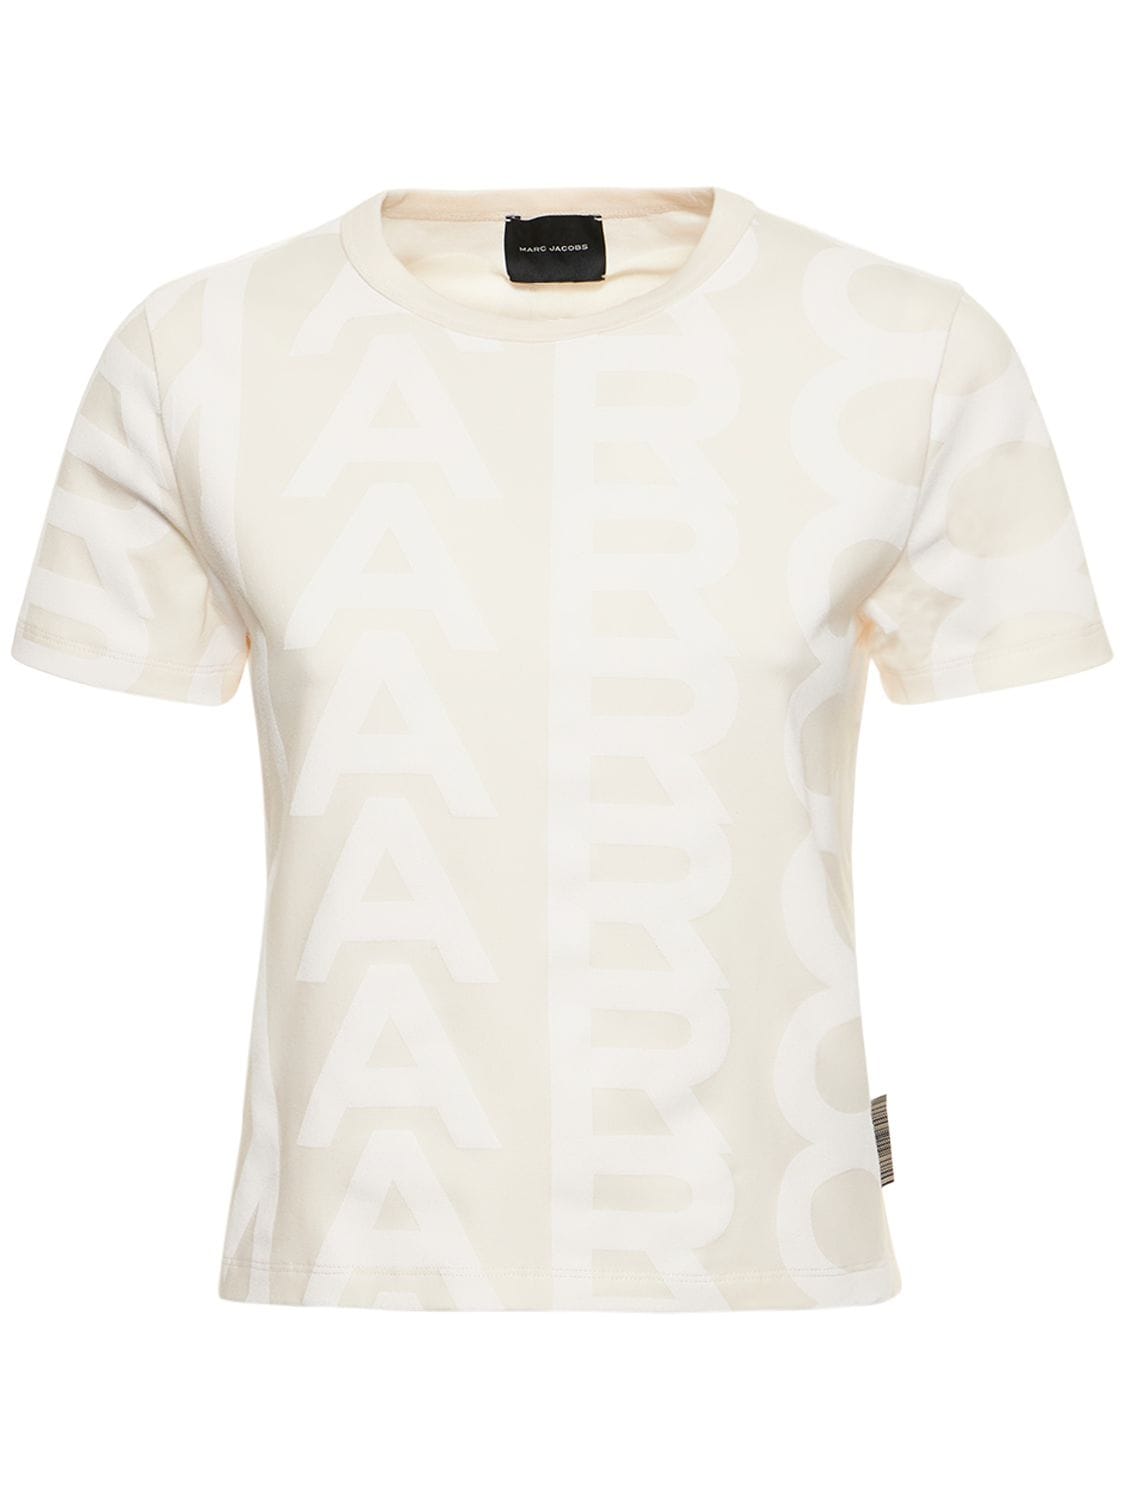 Image of The Monogram Baby Tee Cotton T-shirt